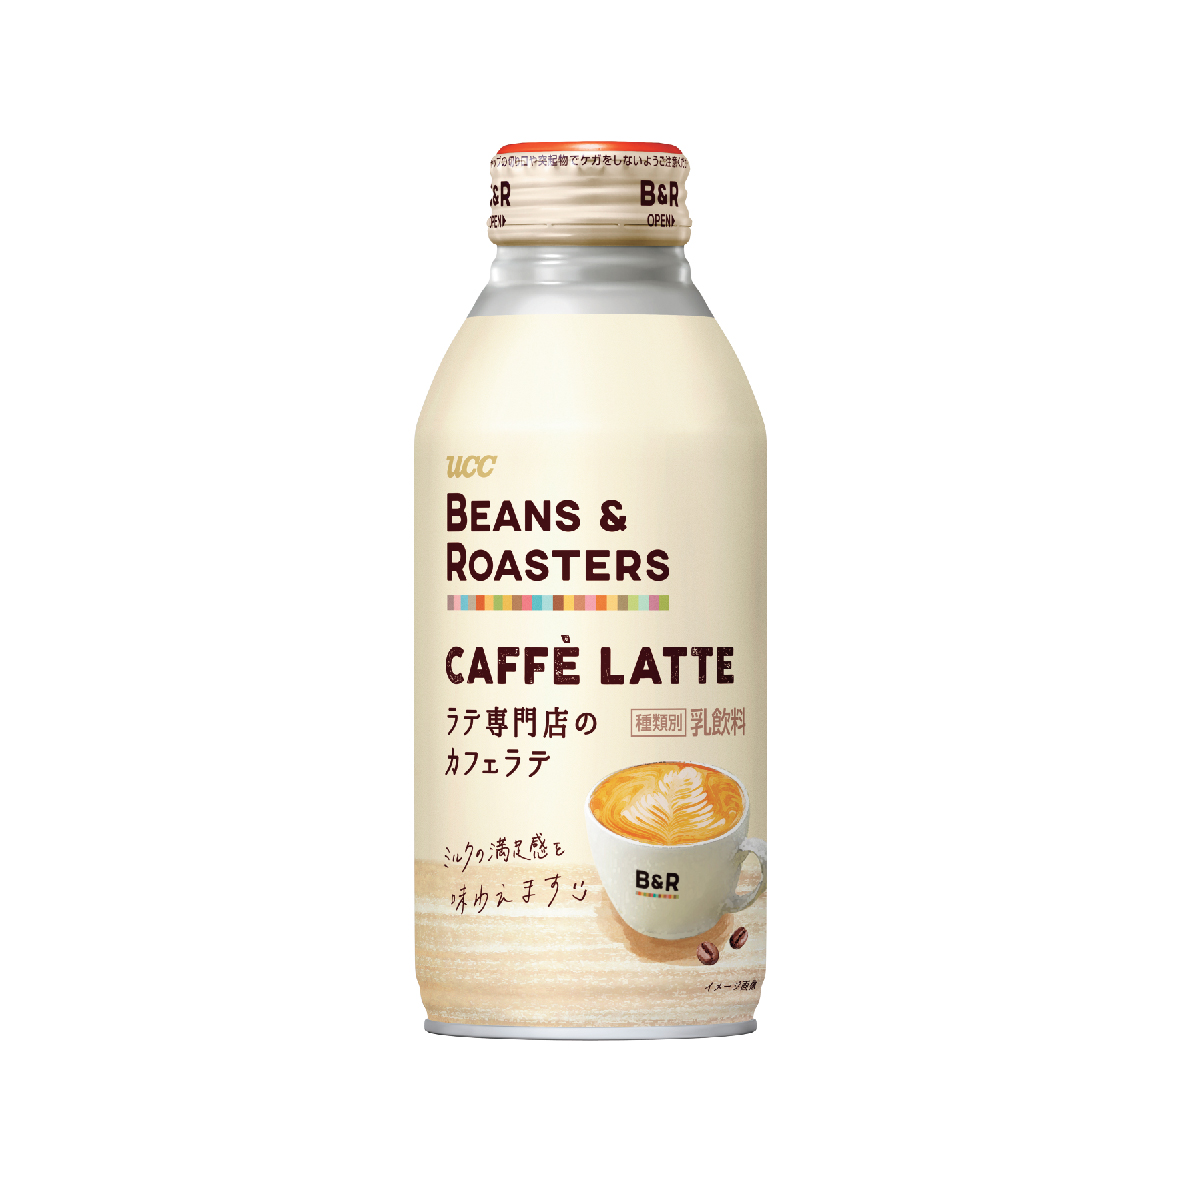 UCC Beans & Roasters Caffe Latte